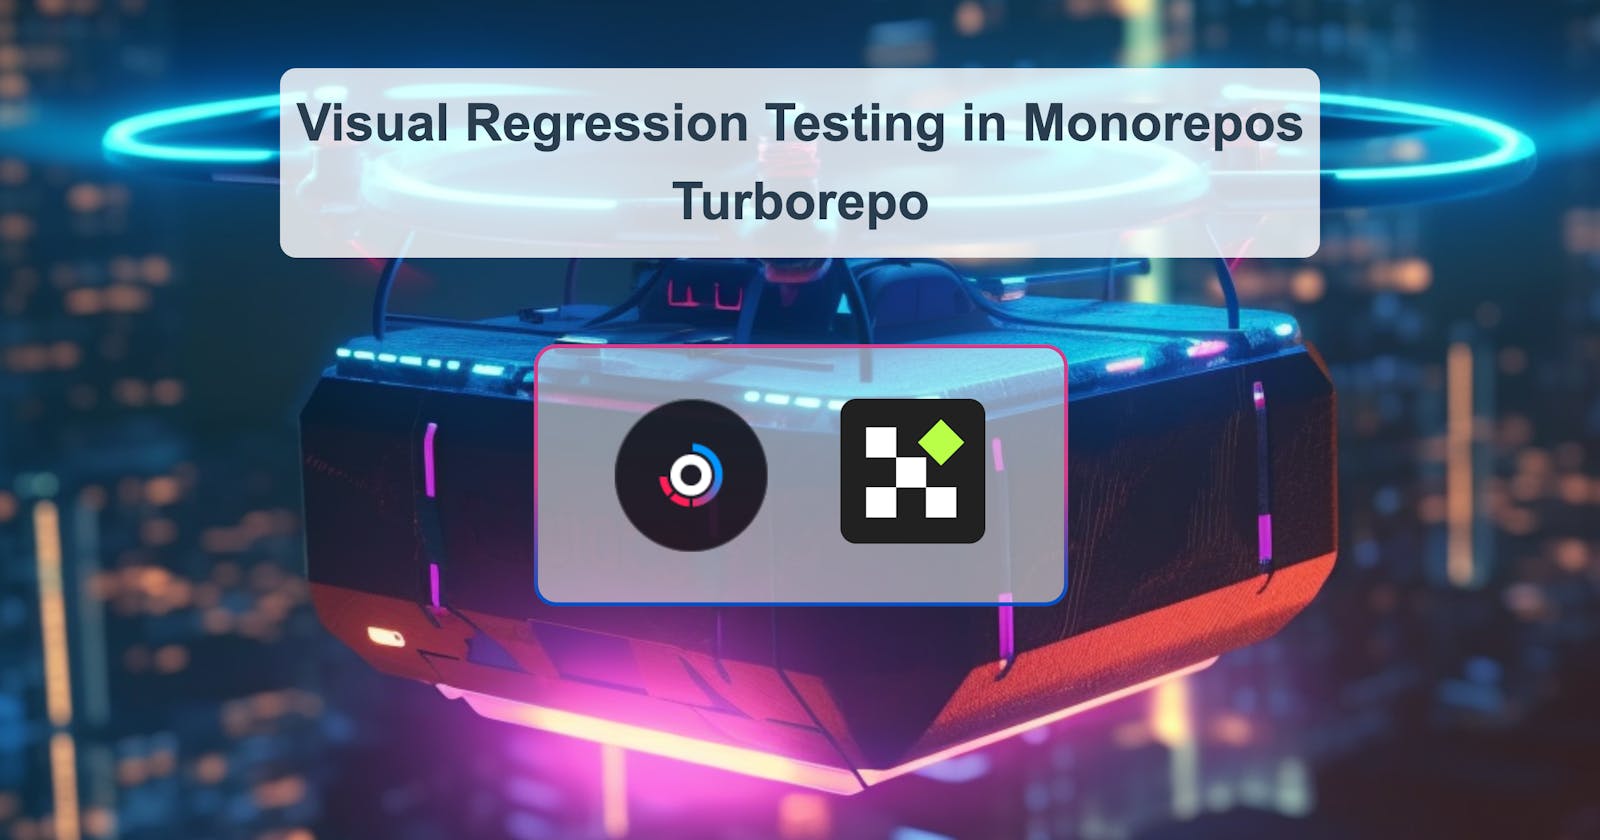 Monorepo Visual Regression Testing. Why & How. (Turborepo example)